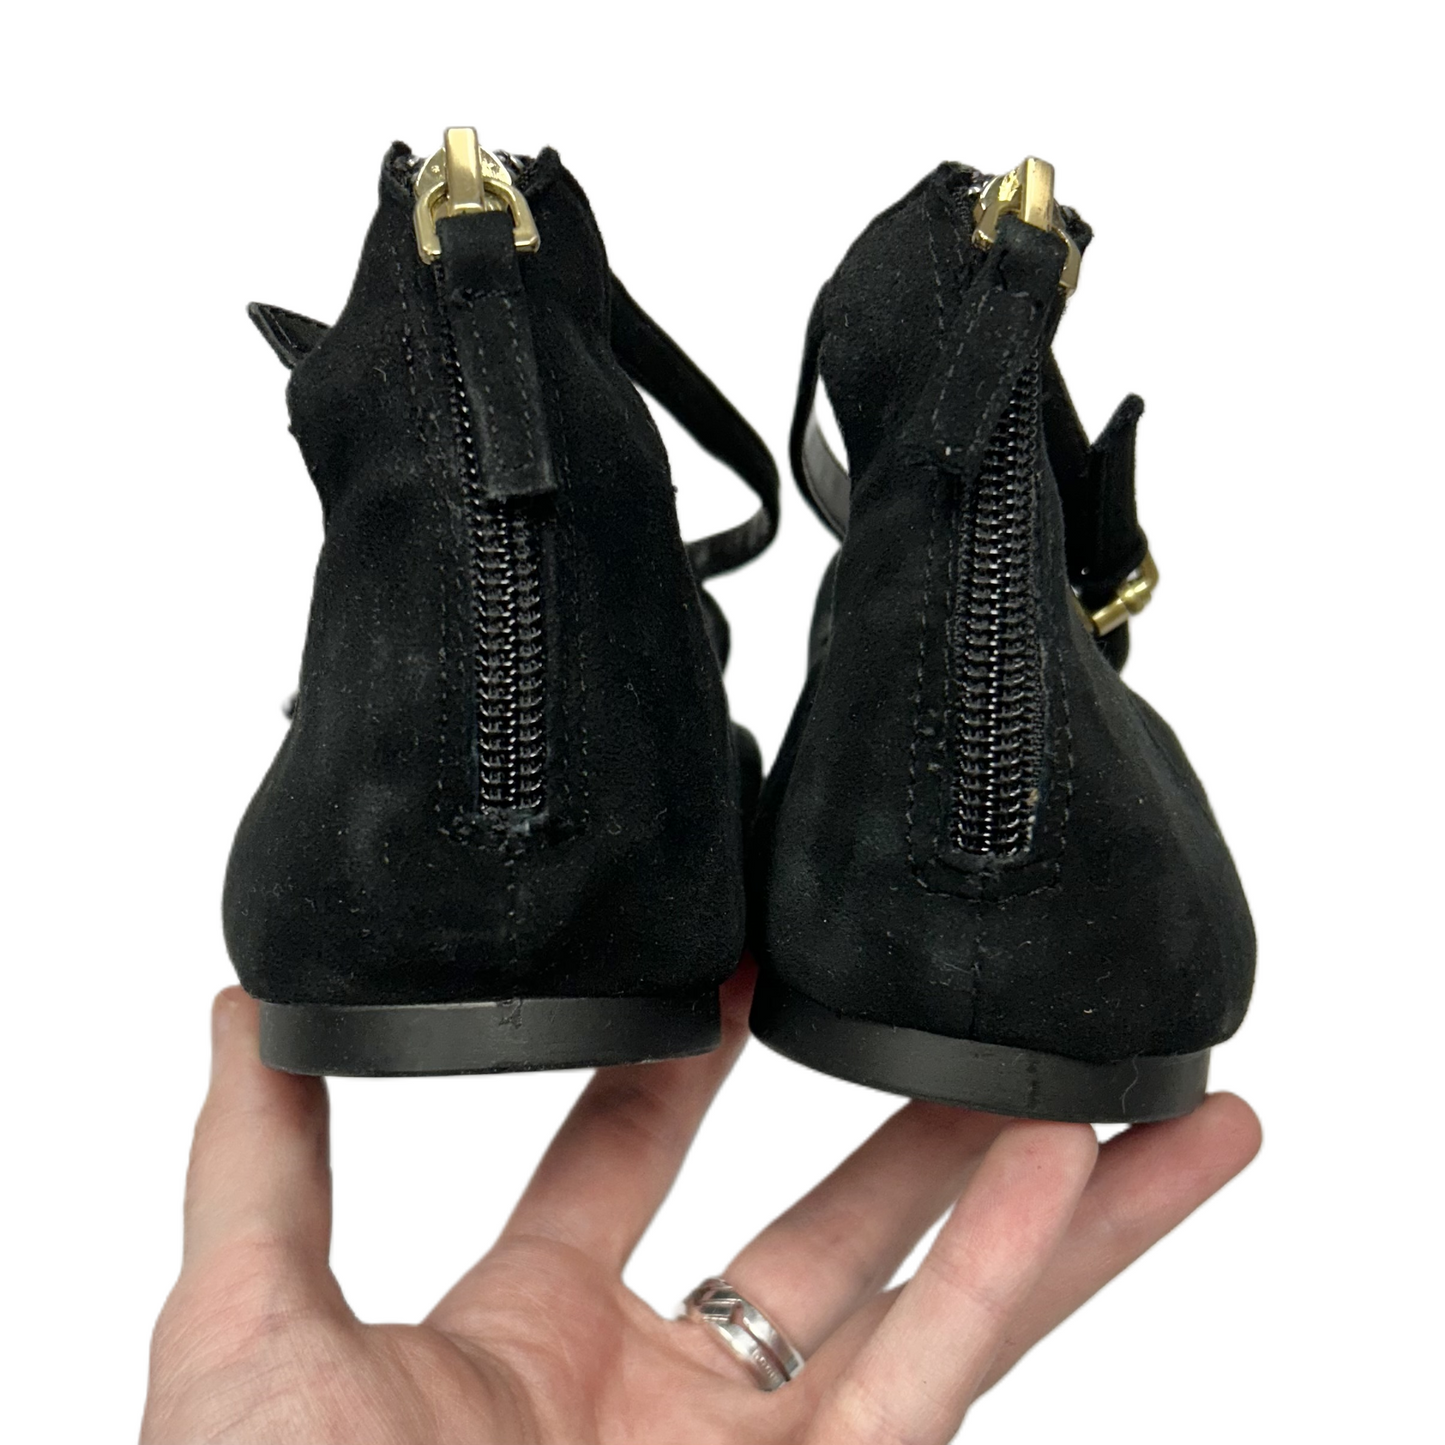 Black Shoes Flats By Crown Vintage, Size: 11